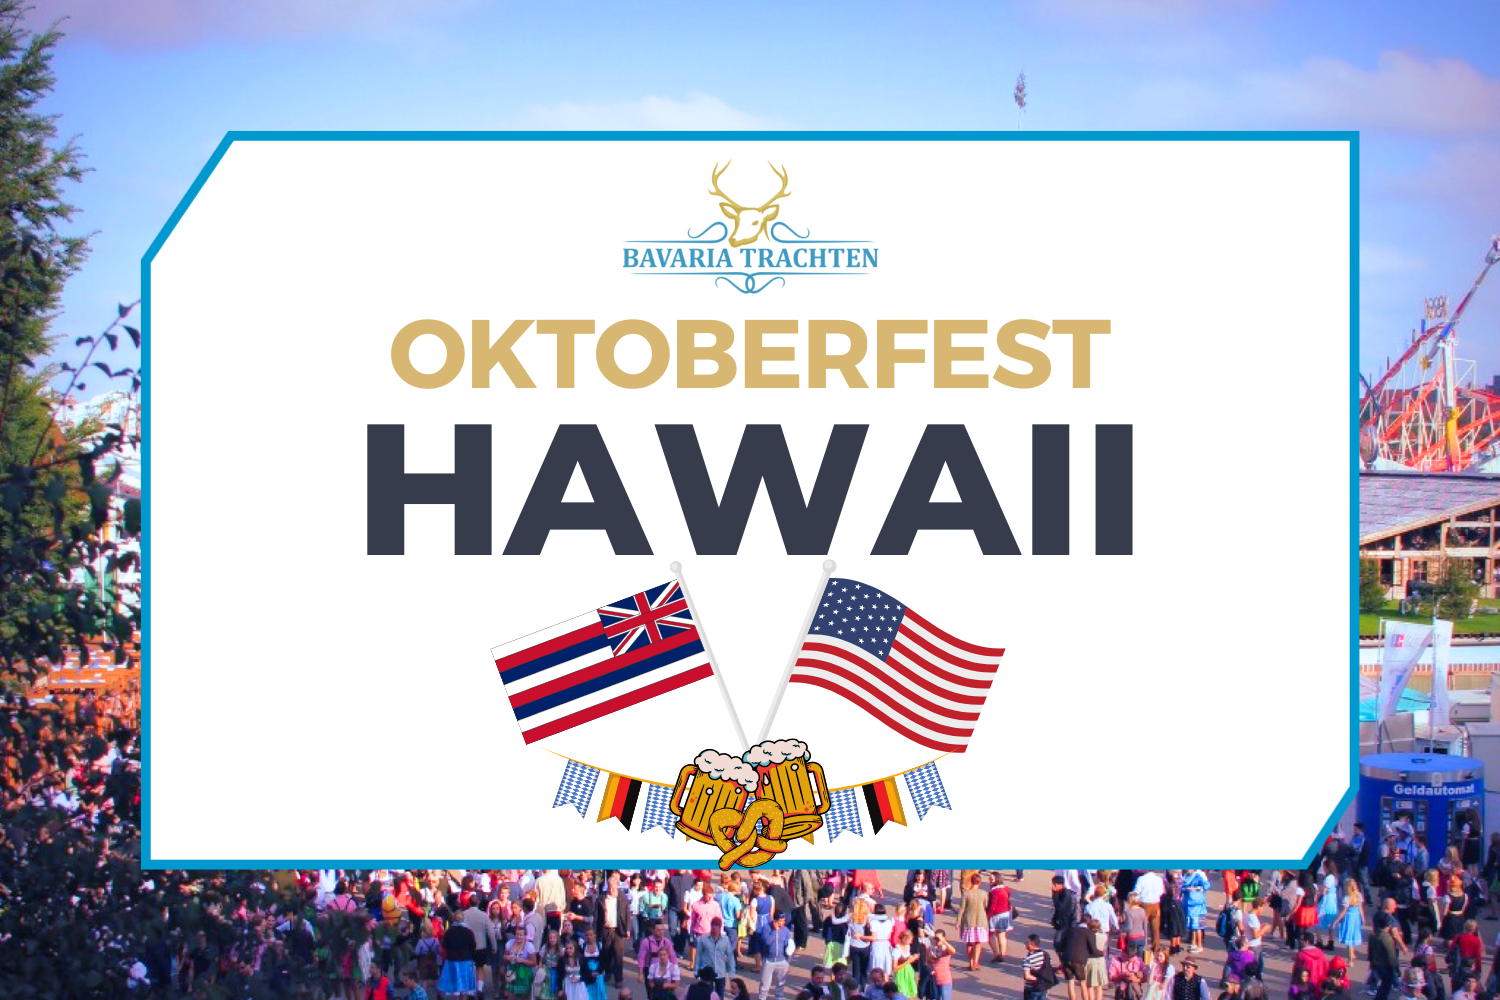 Celebrate with Aloha Oktoberfest in Hawaii Bavaria Trachten